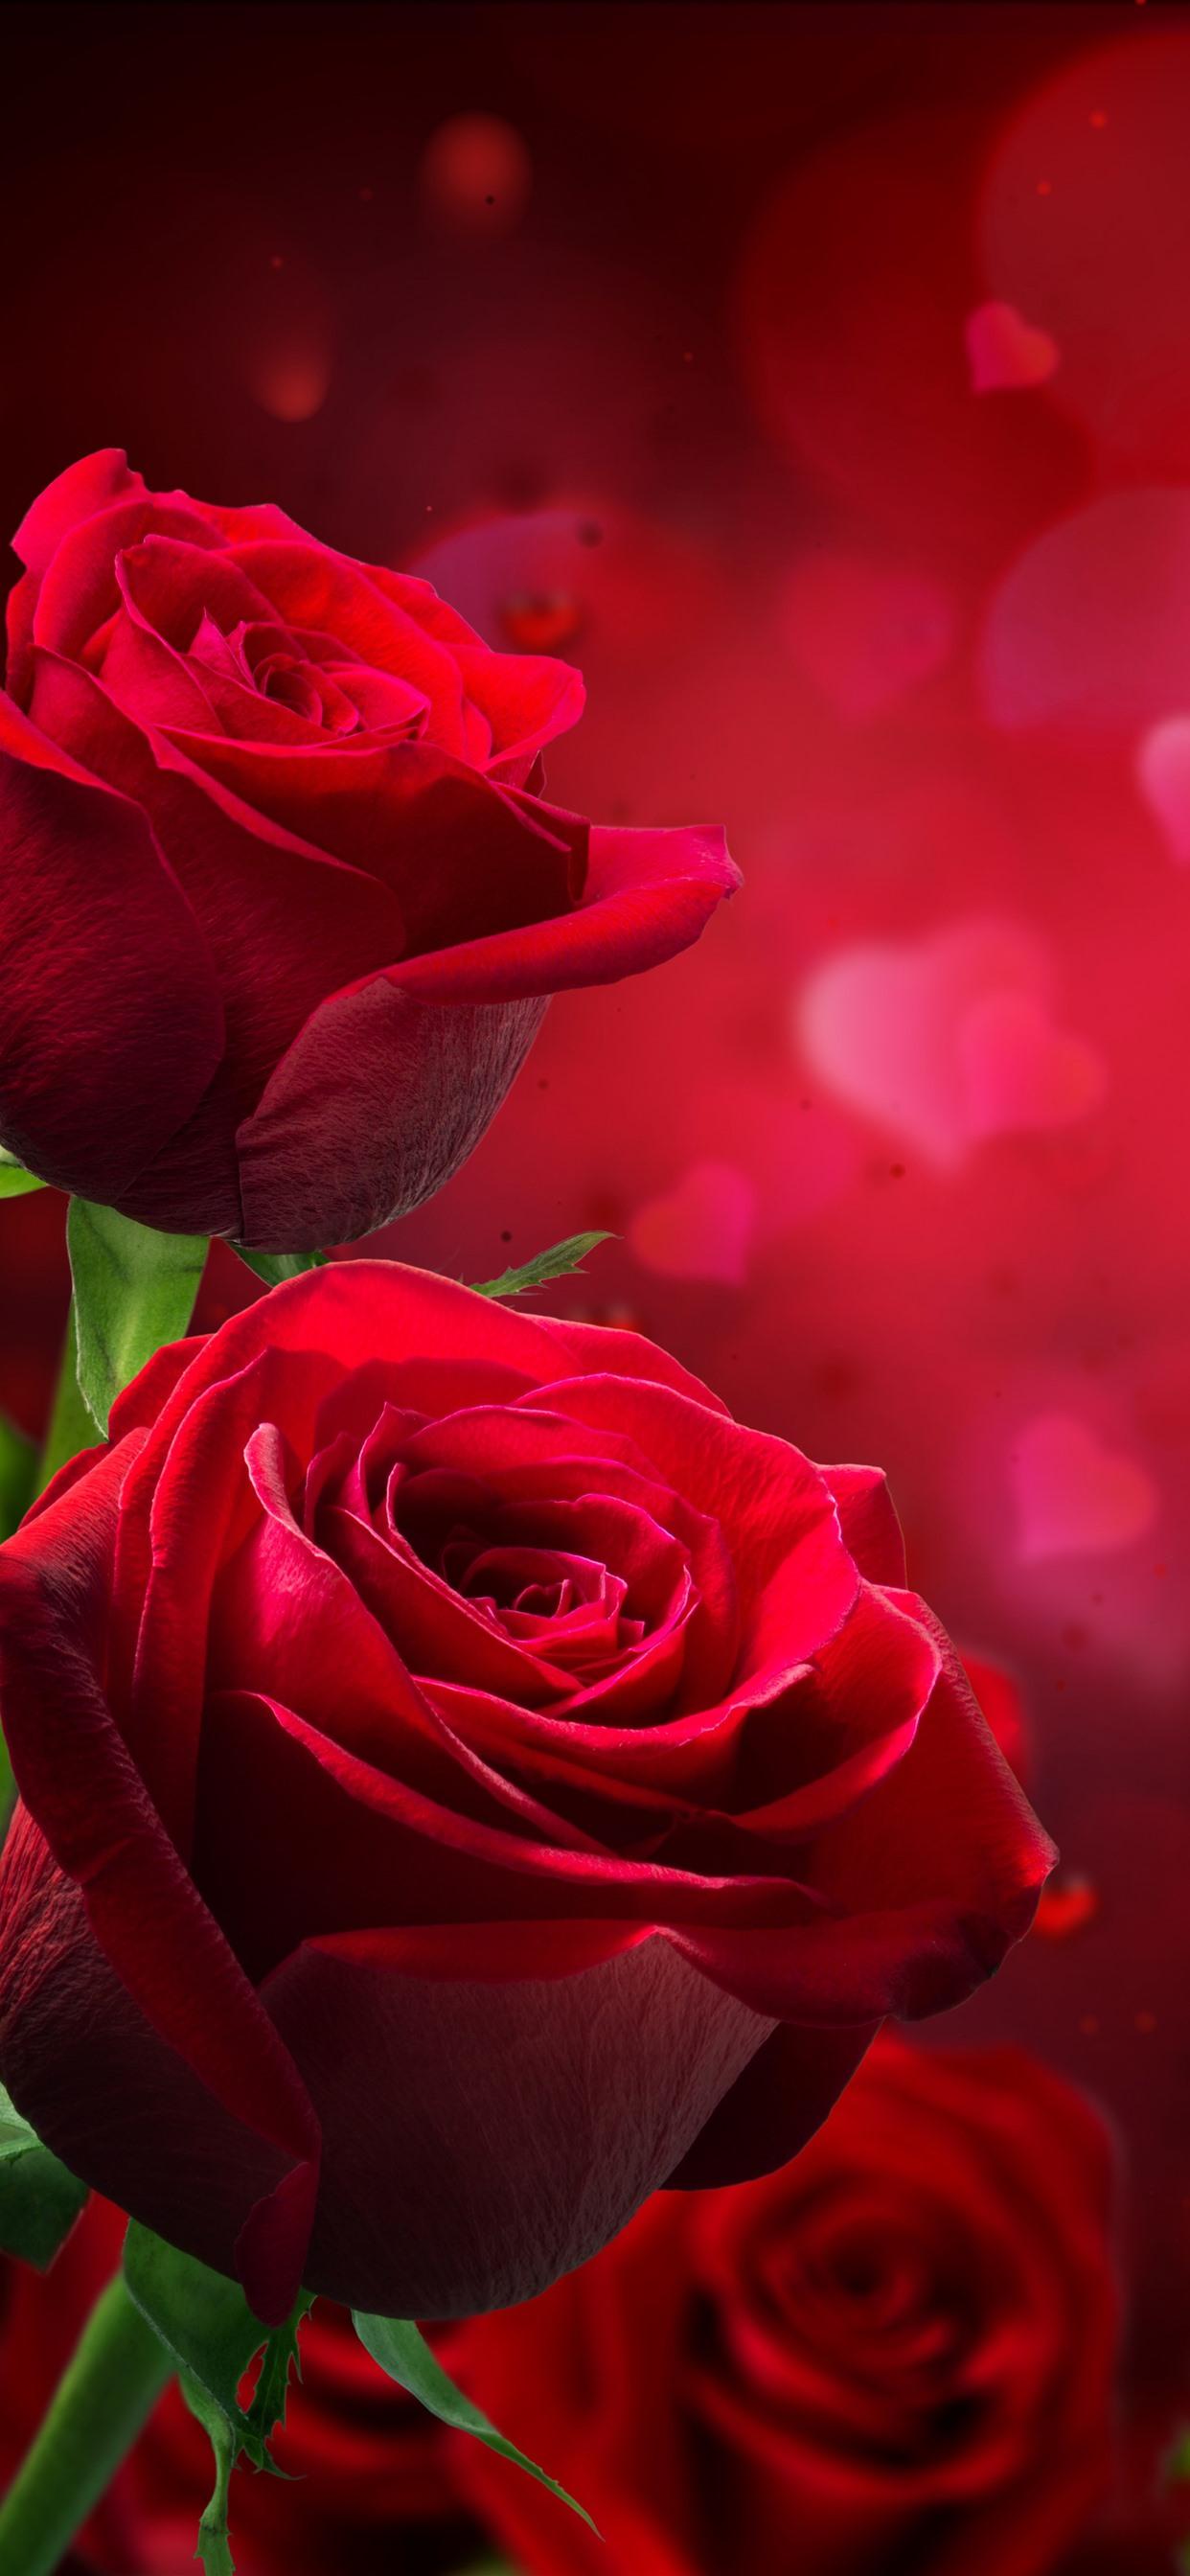 Red roses, love hearts, hazy, romantic 1242x2688 iPhone XS